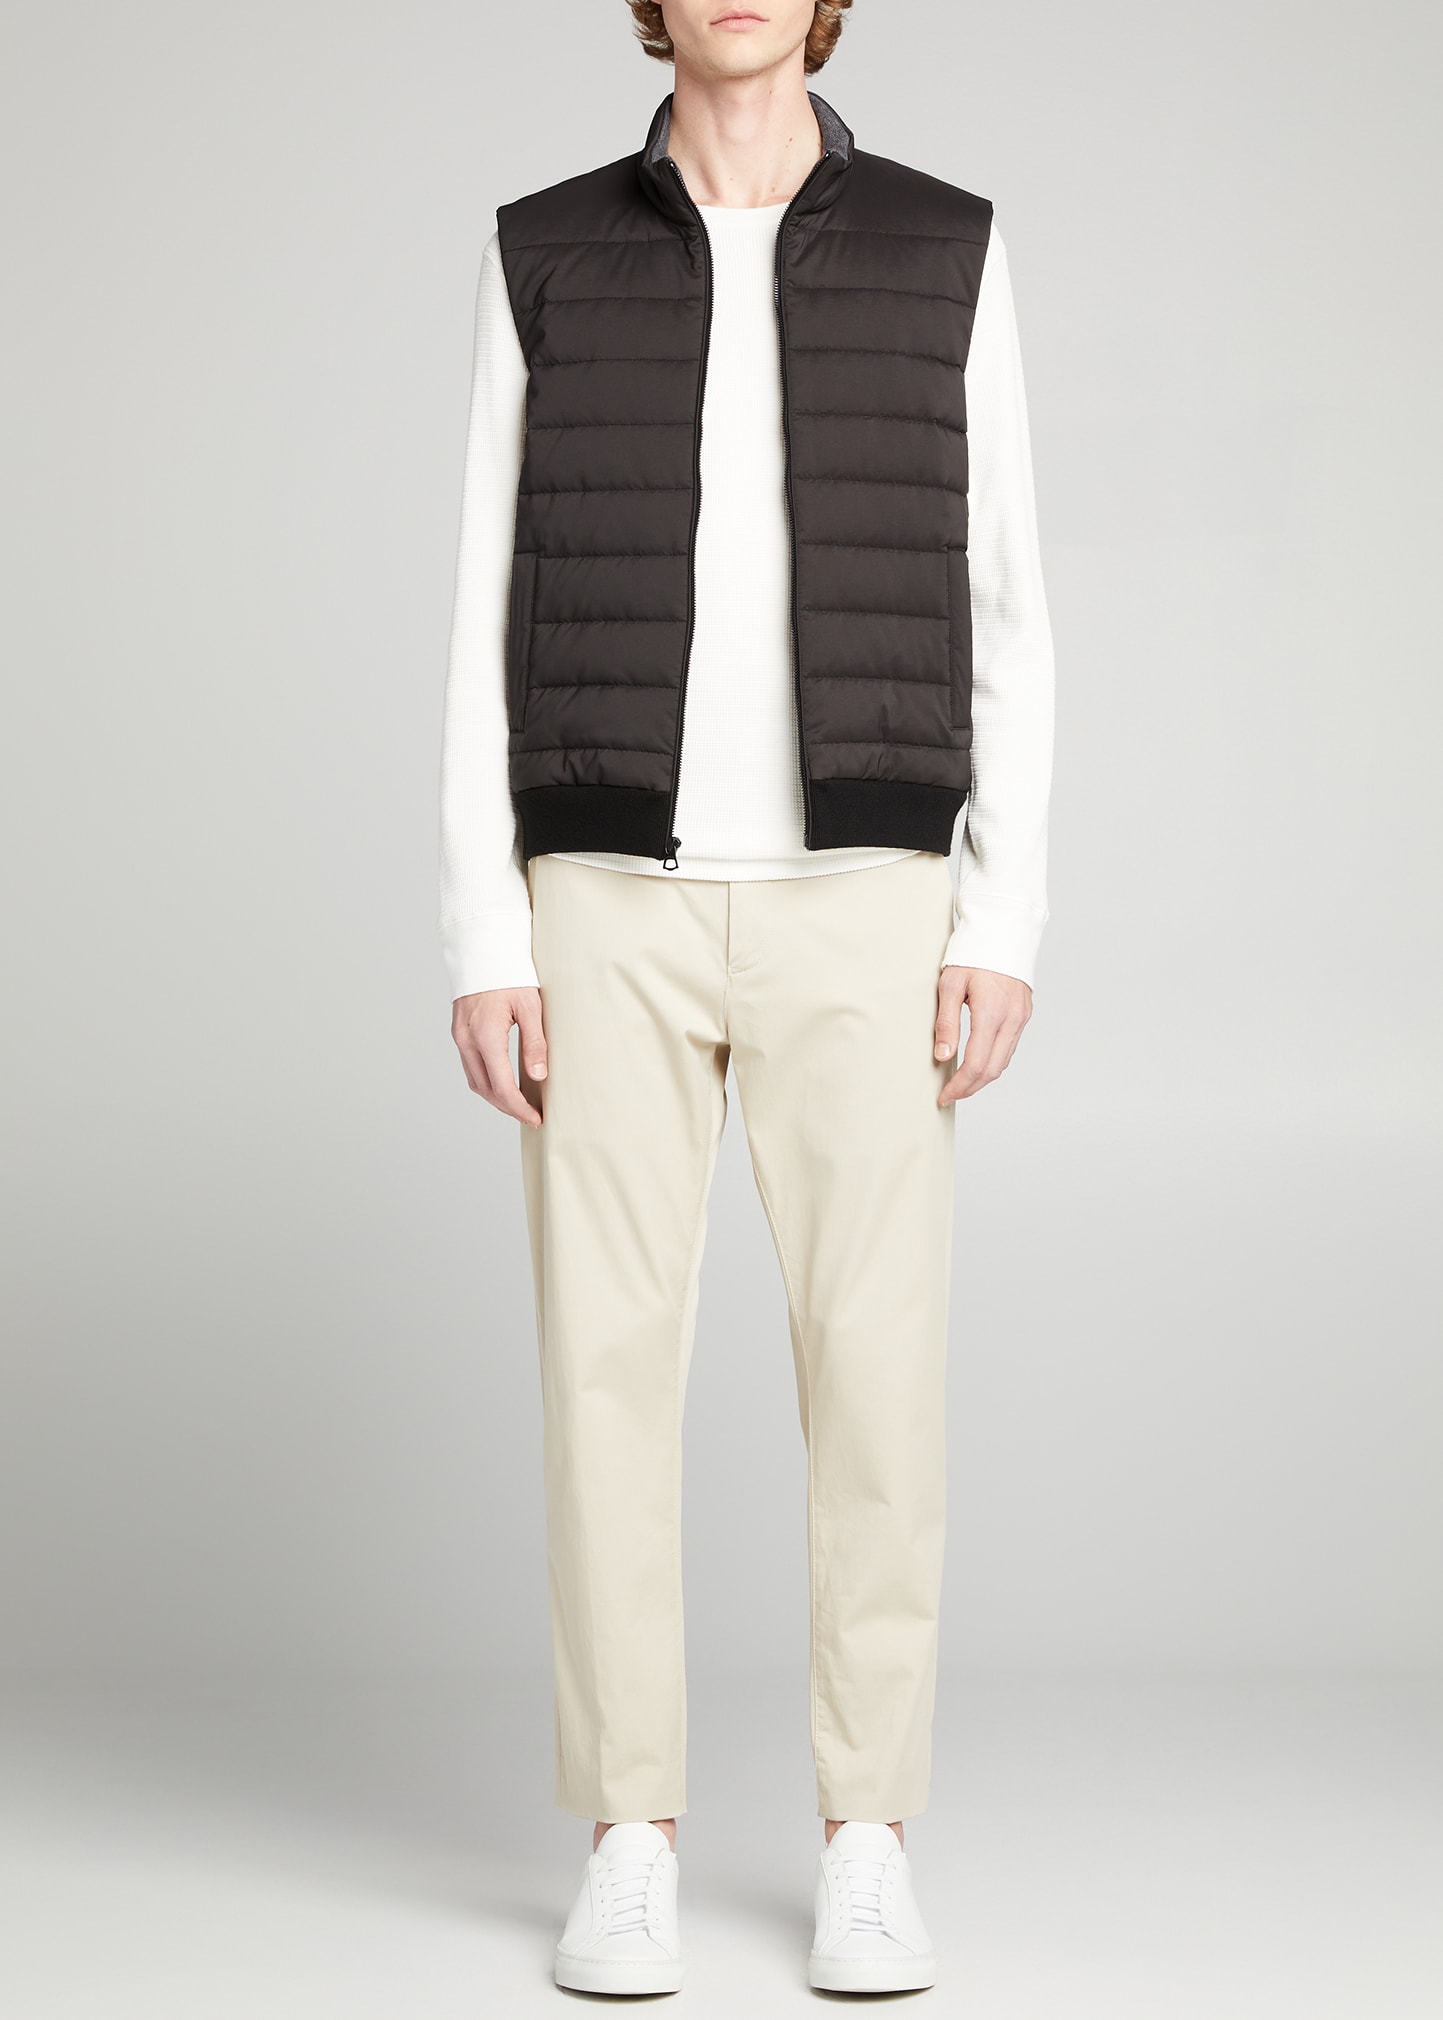 Vince Men's Quilted Wool/Nylon Vest